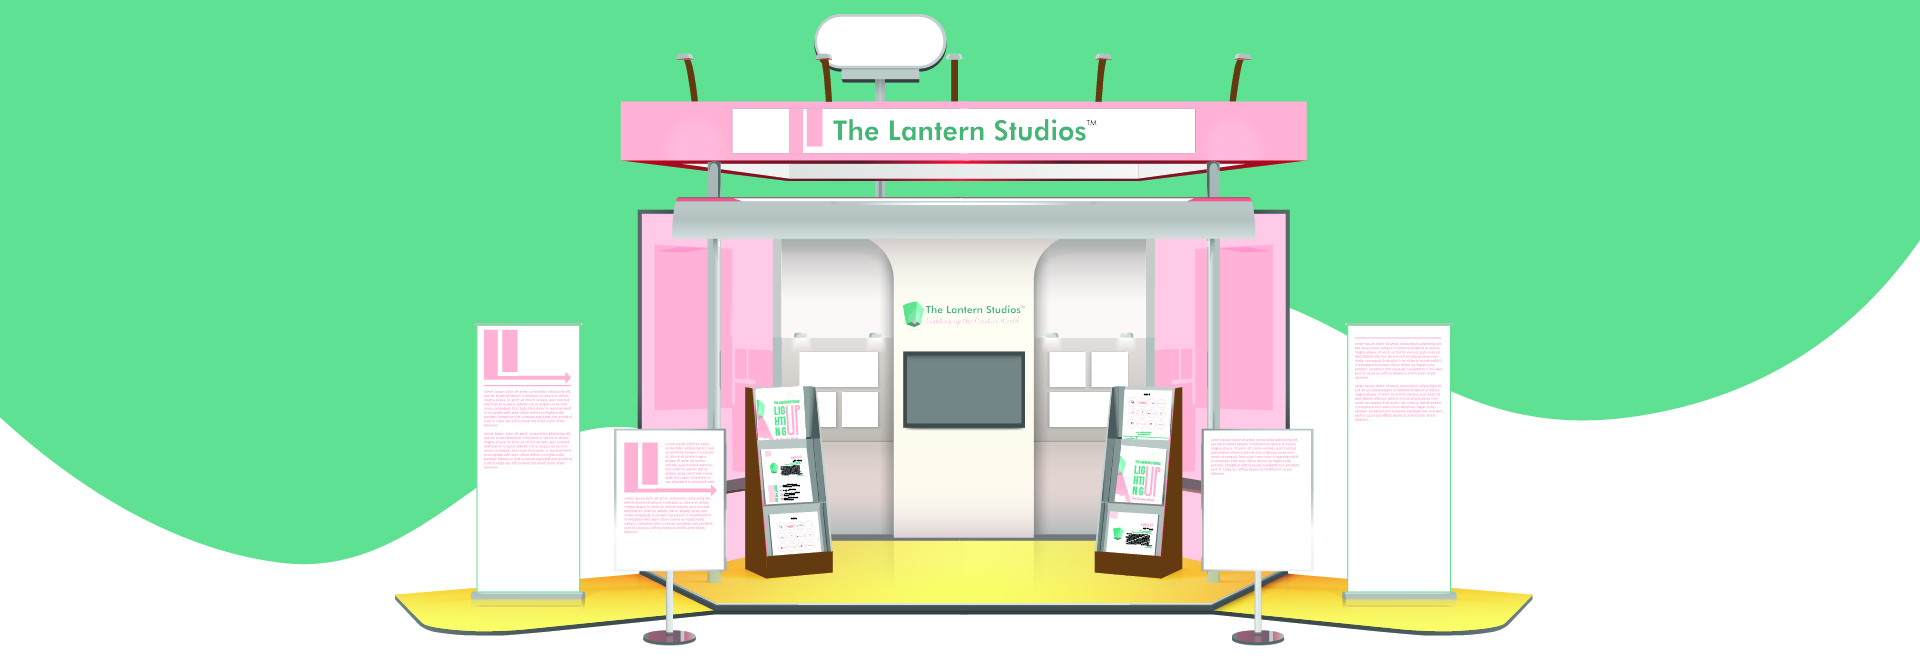 The Lantern Studios